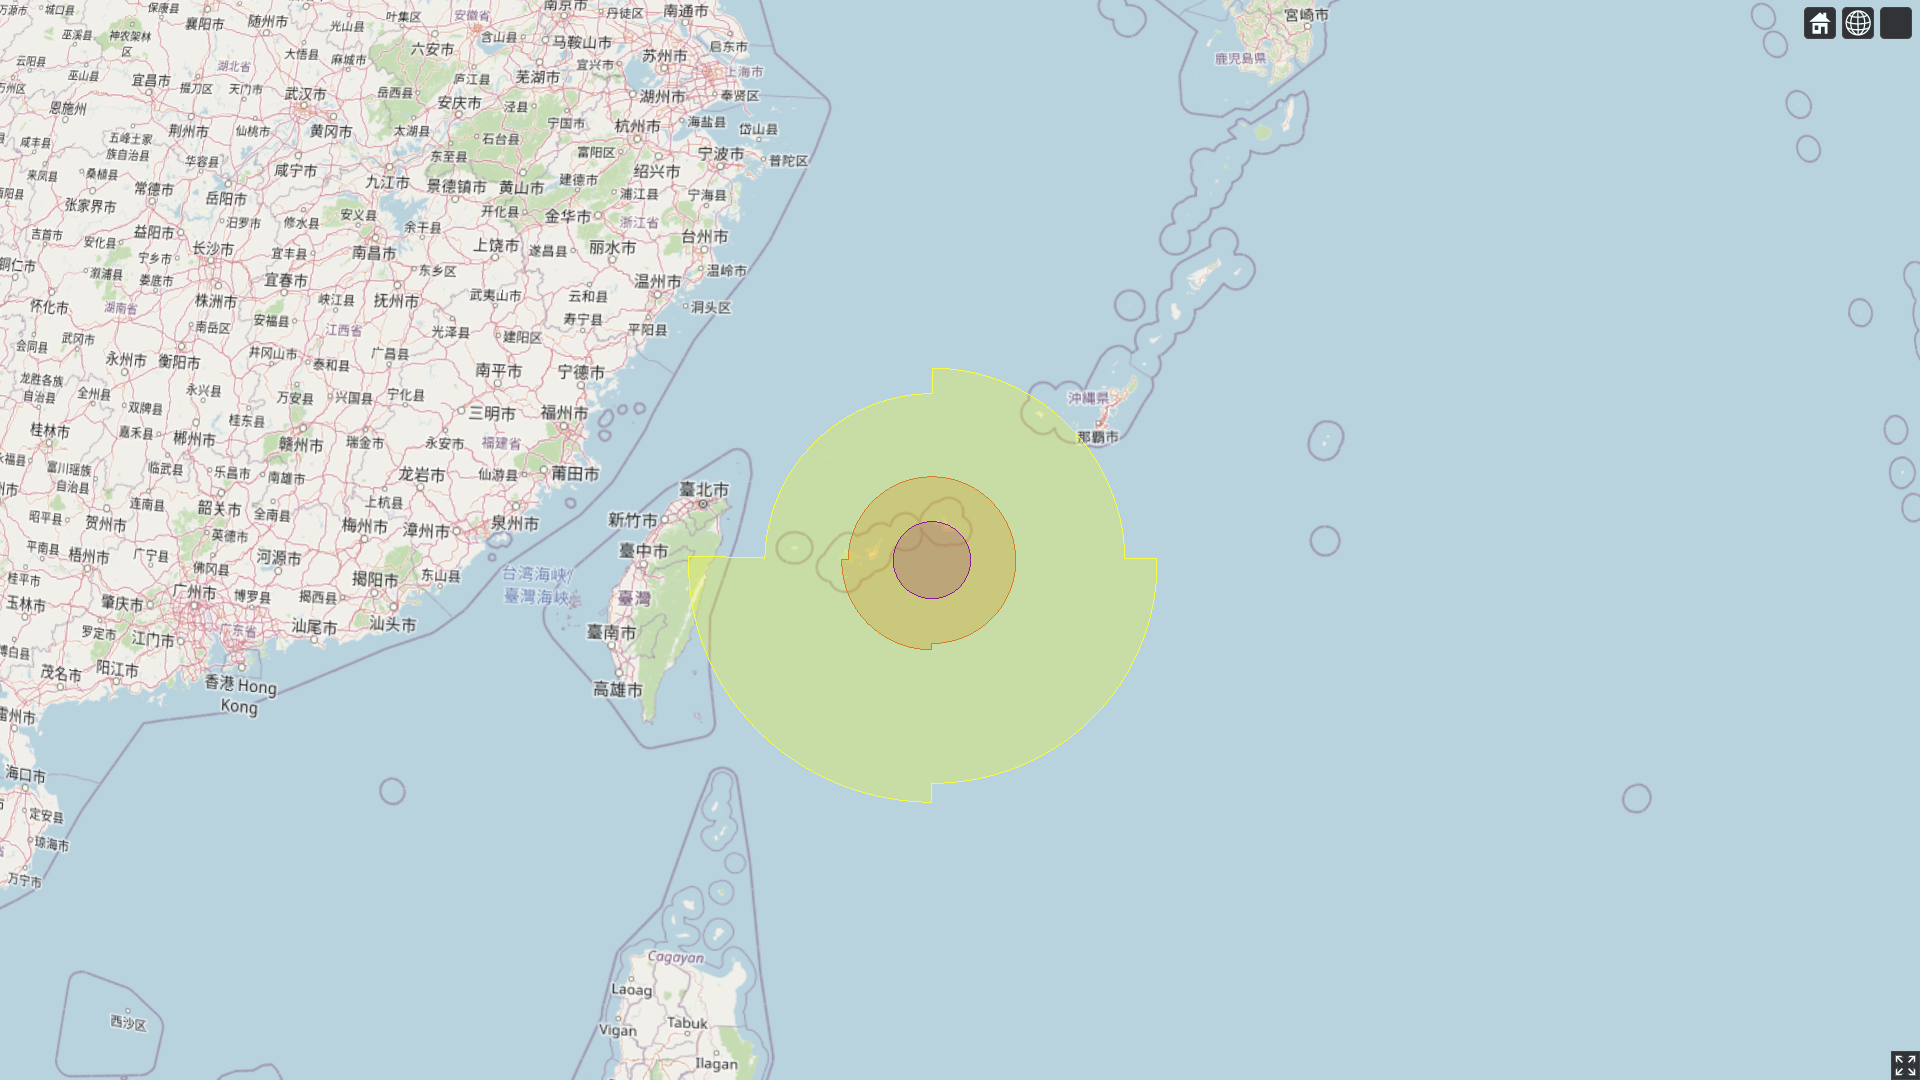 esium-typhoon-circle.png